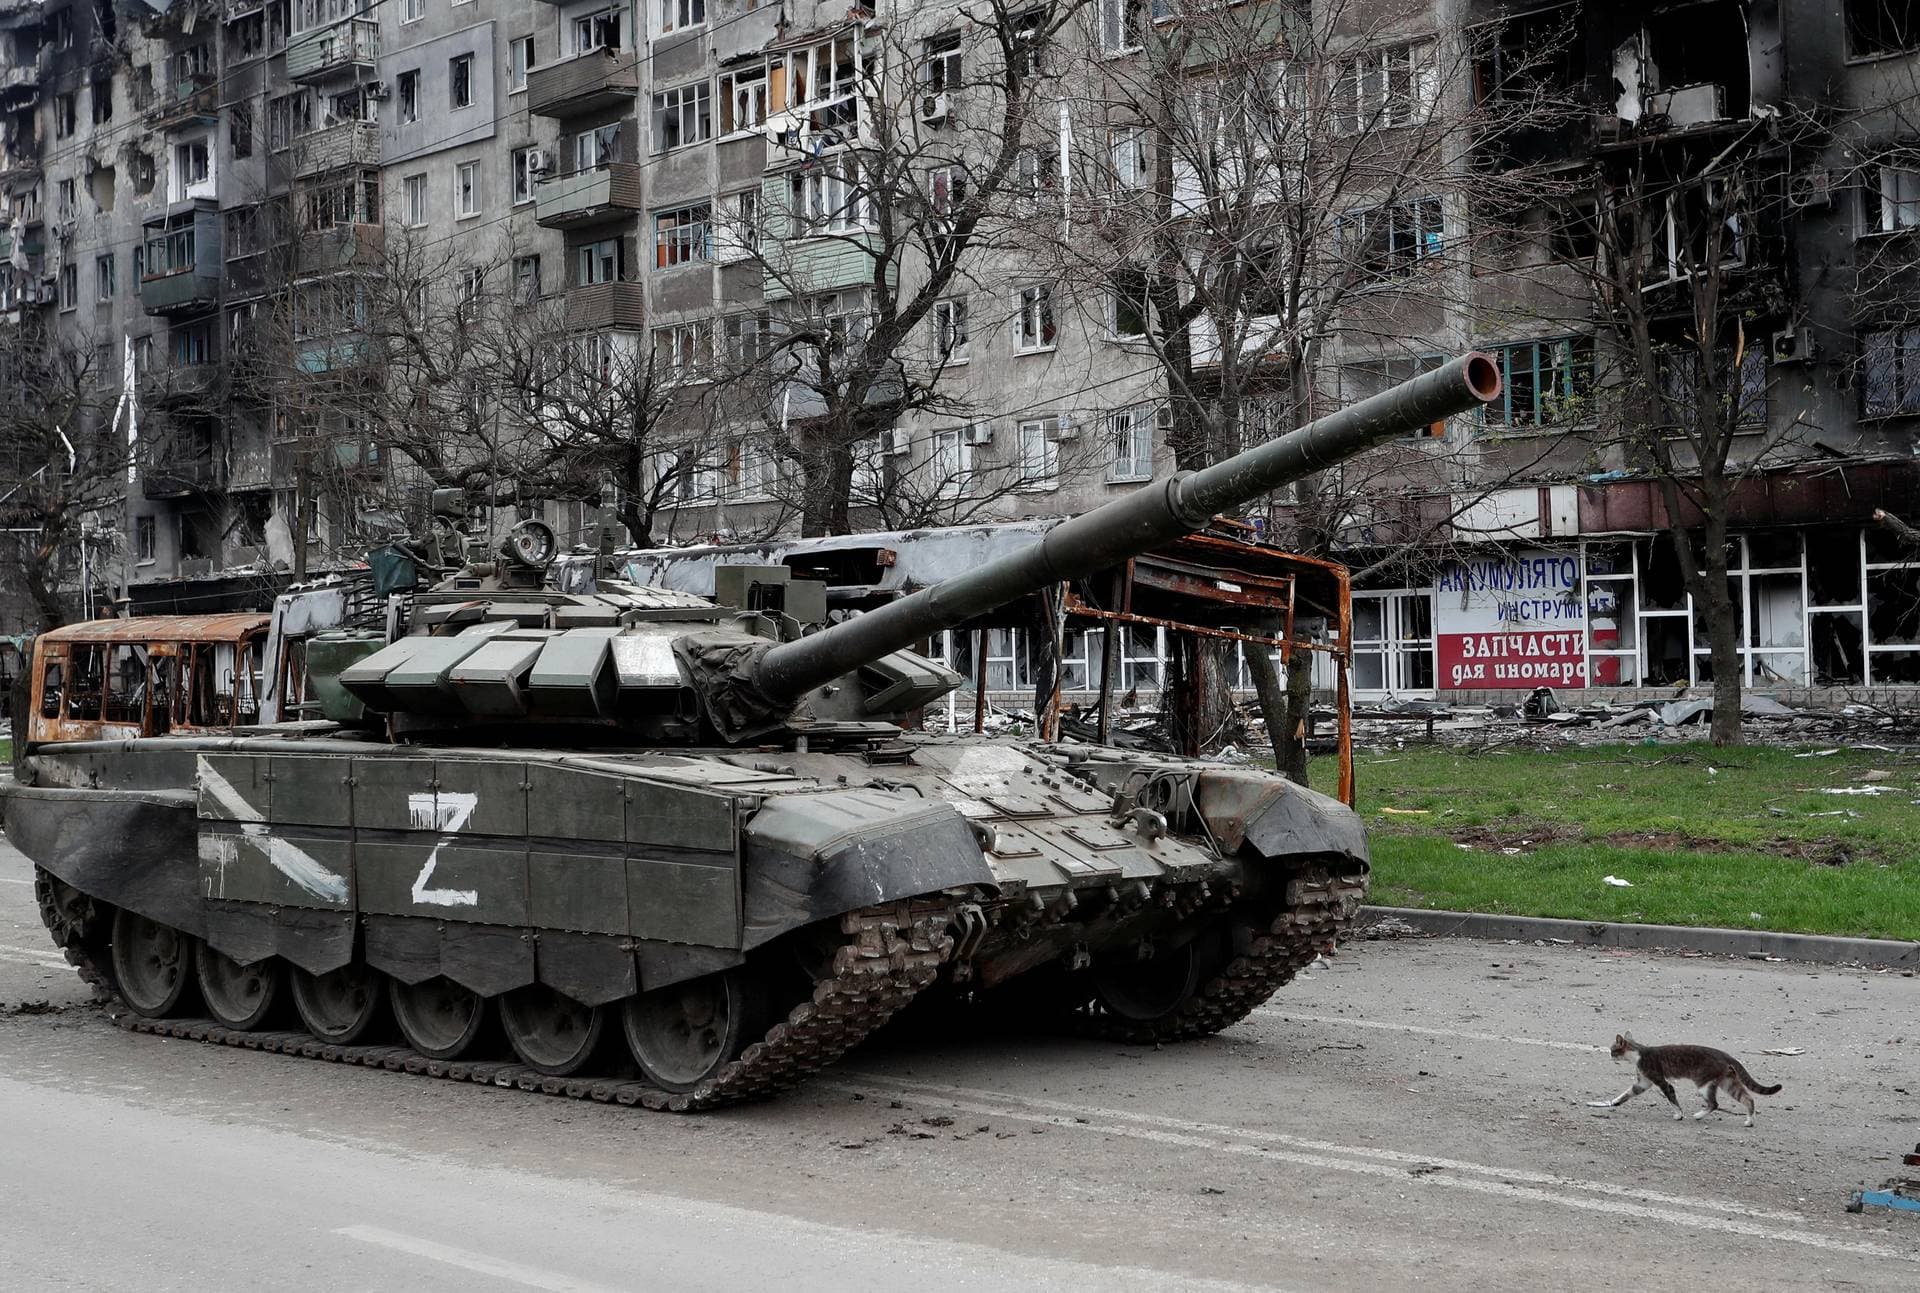 A cat walks next to a tank in Mariupol